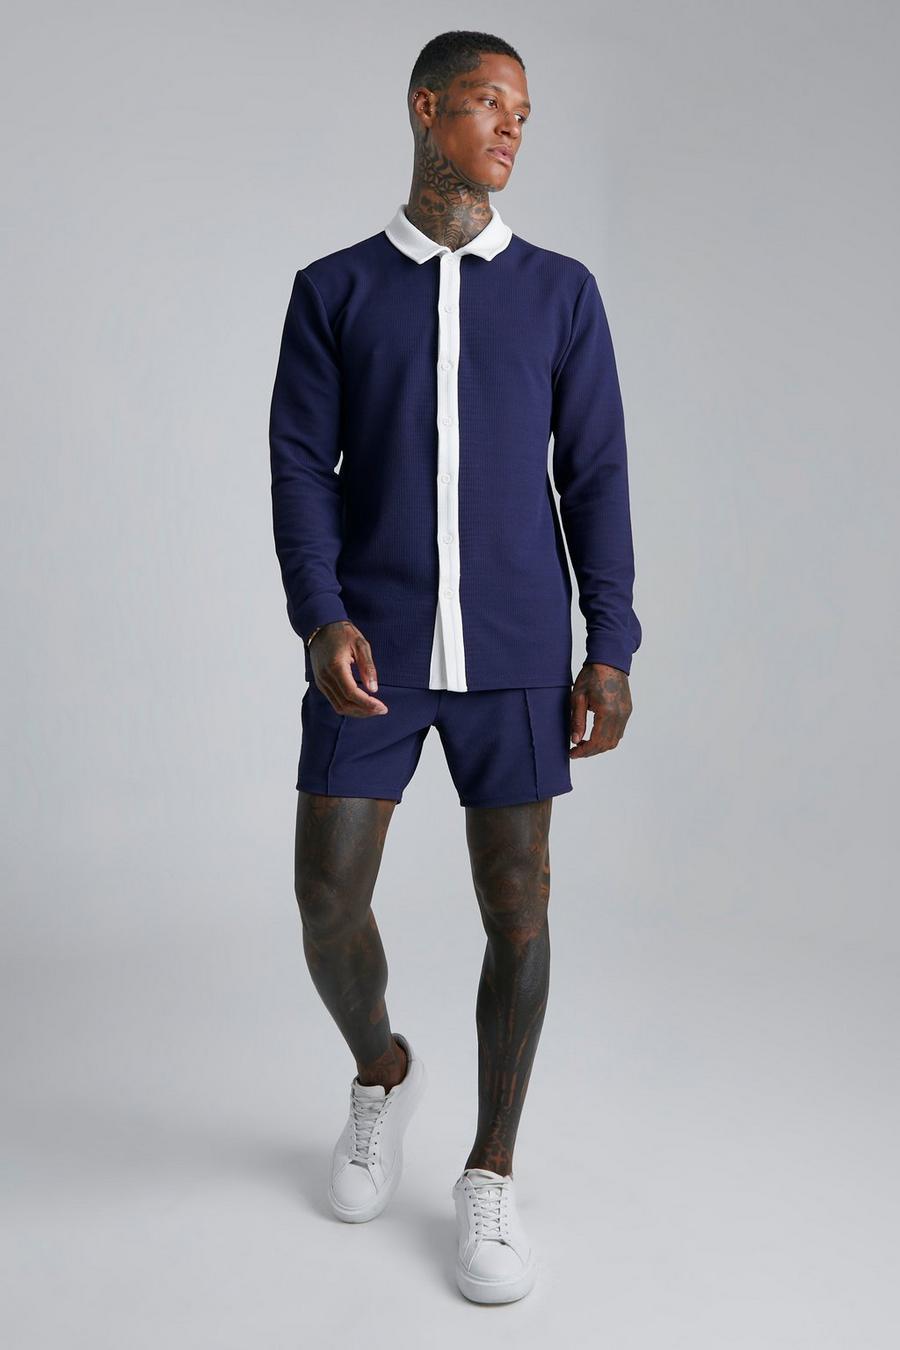 Pantalón corto y camisa texturizada de manga larga y tela jersey, Navy azul marino